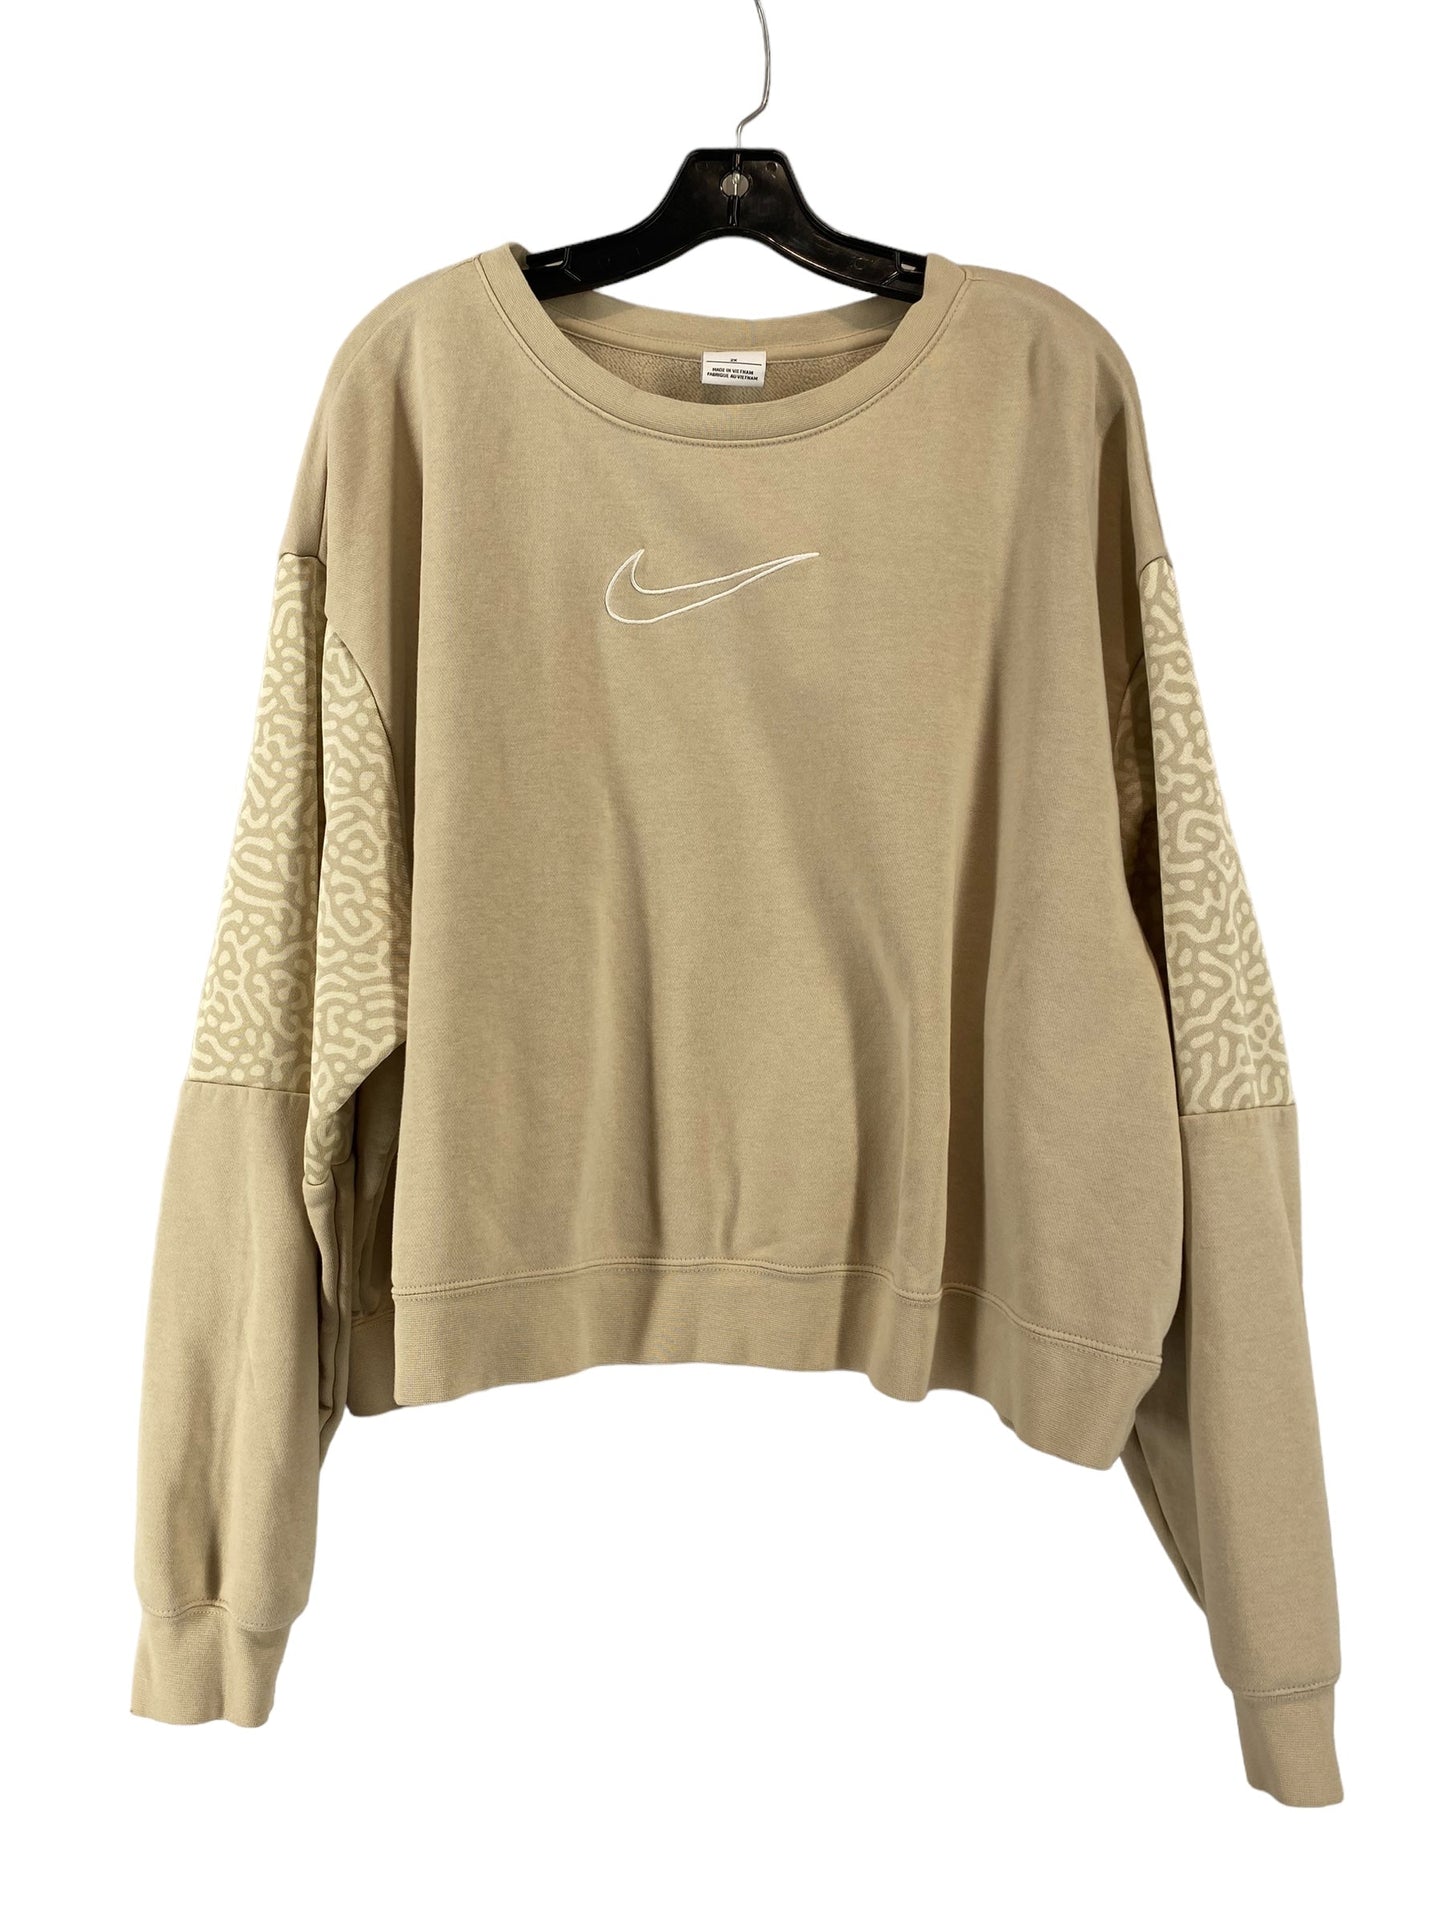 Beige Athletic Sweatshirt Crewneck Nike Apparel, Size 2x